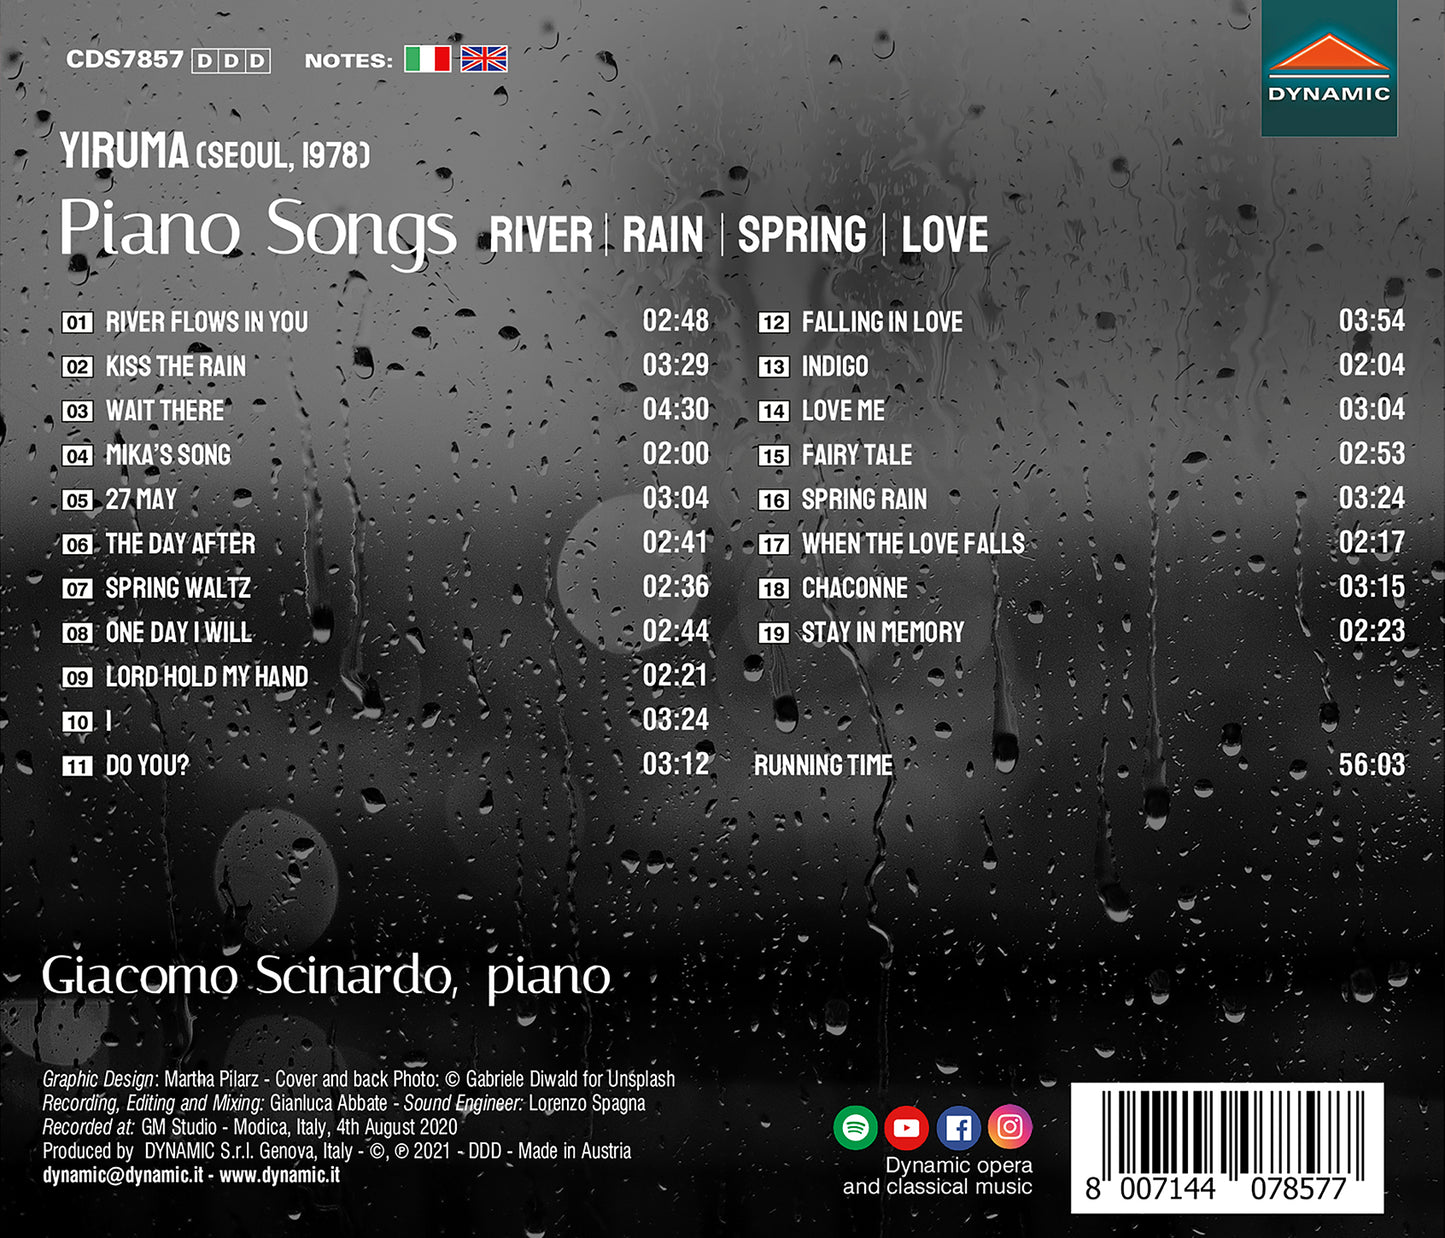 Yiruma: Piano Songs, River  - Rain  - Spring  - Love